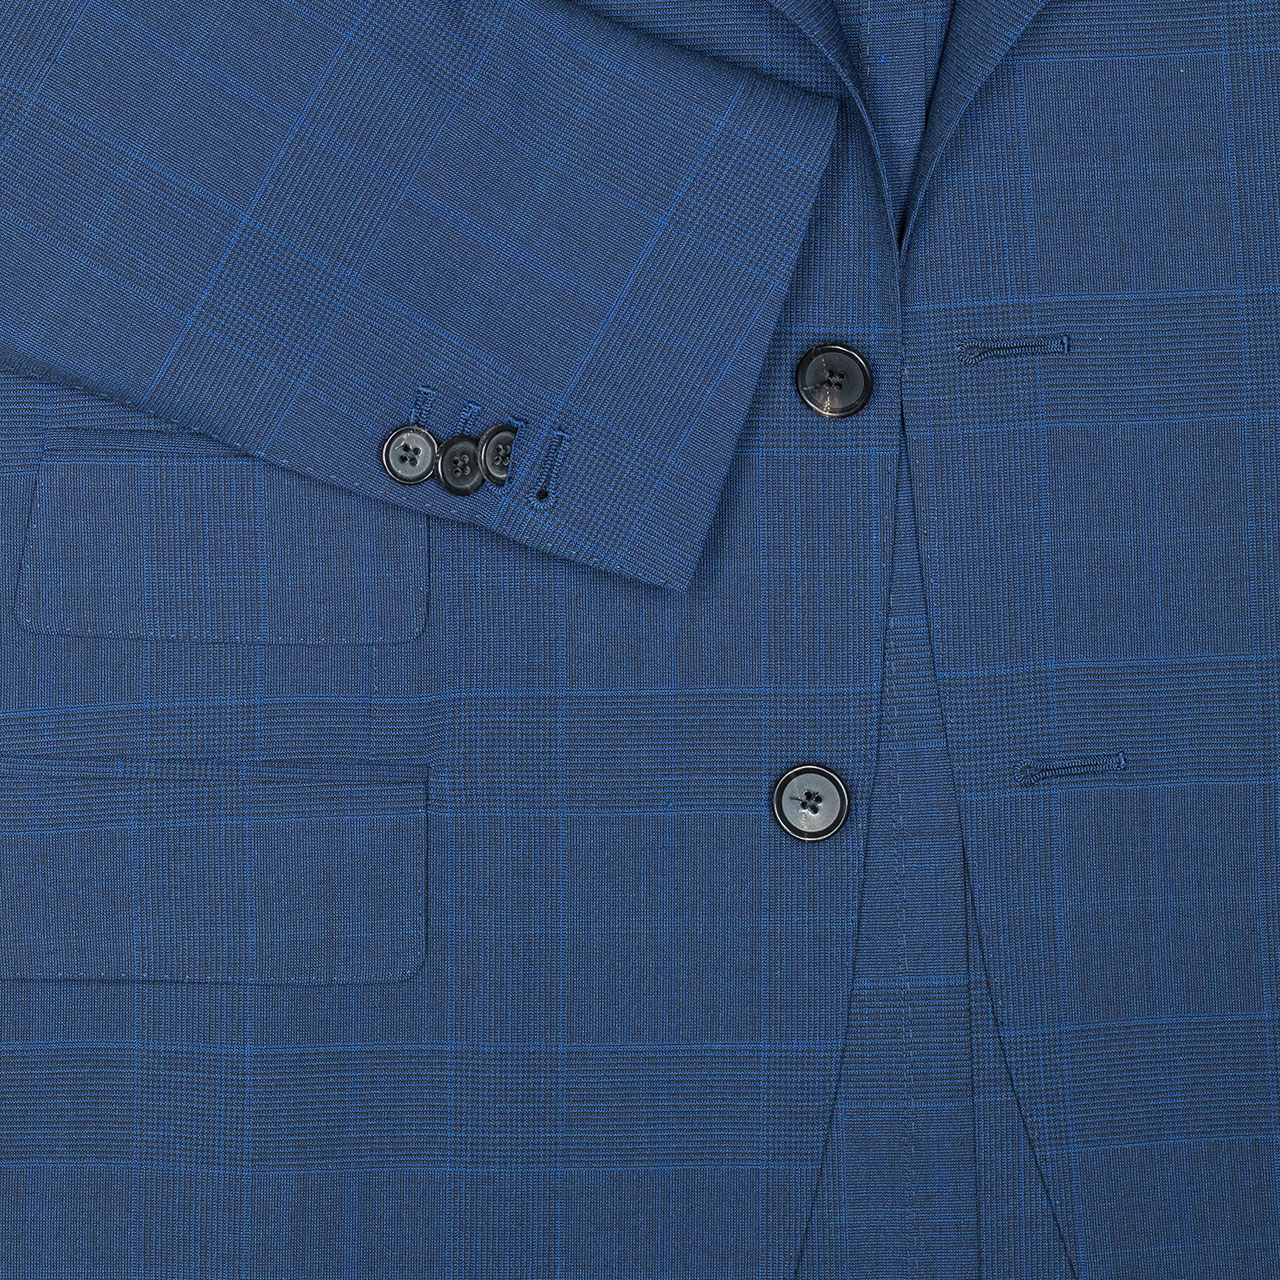 Caruso Anzug in blau mit hellblauen Glencheckmuster